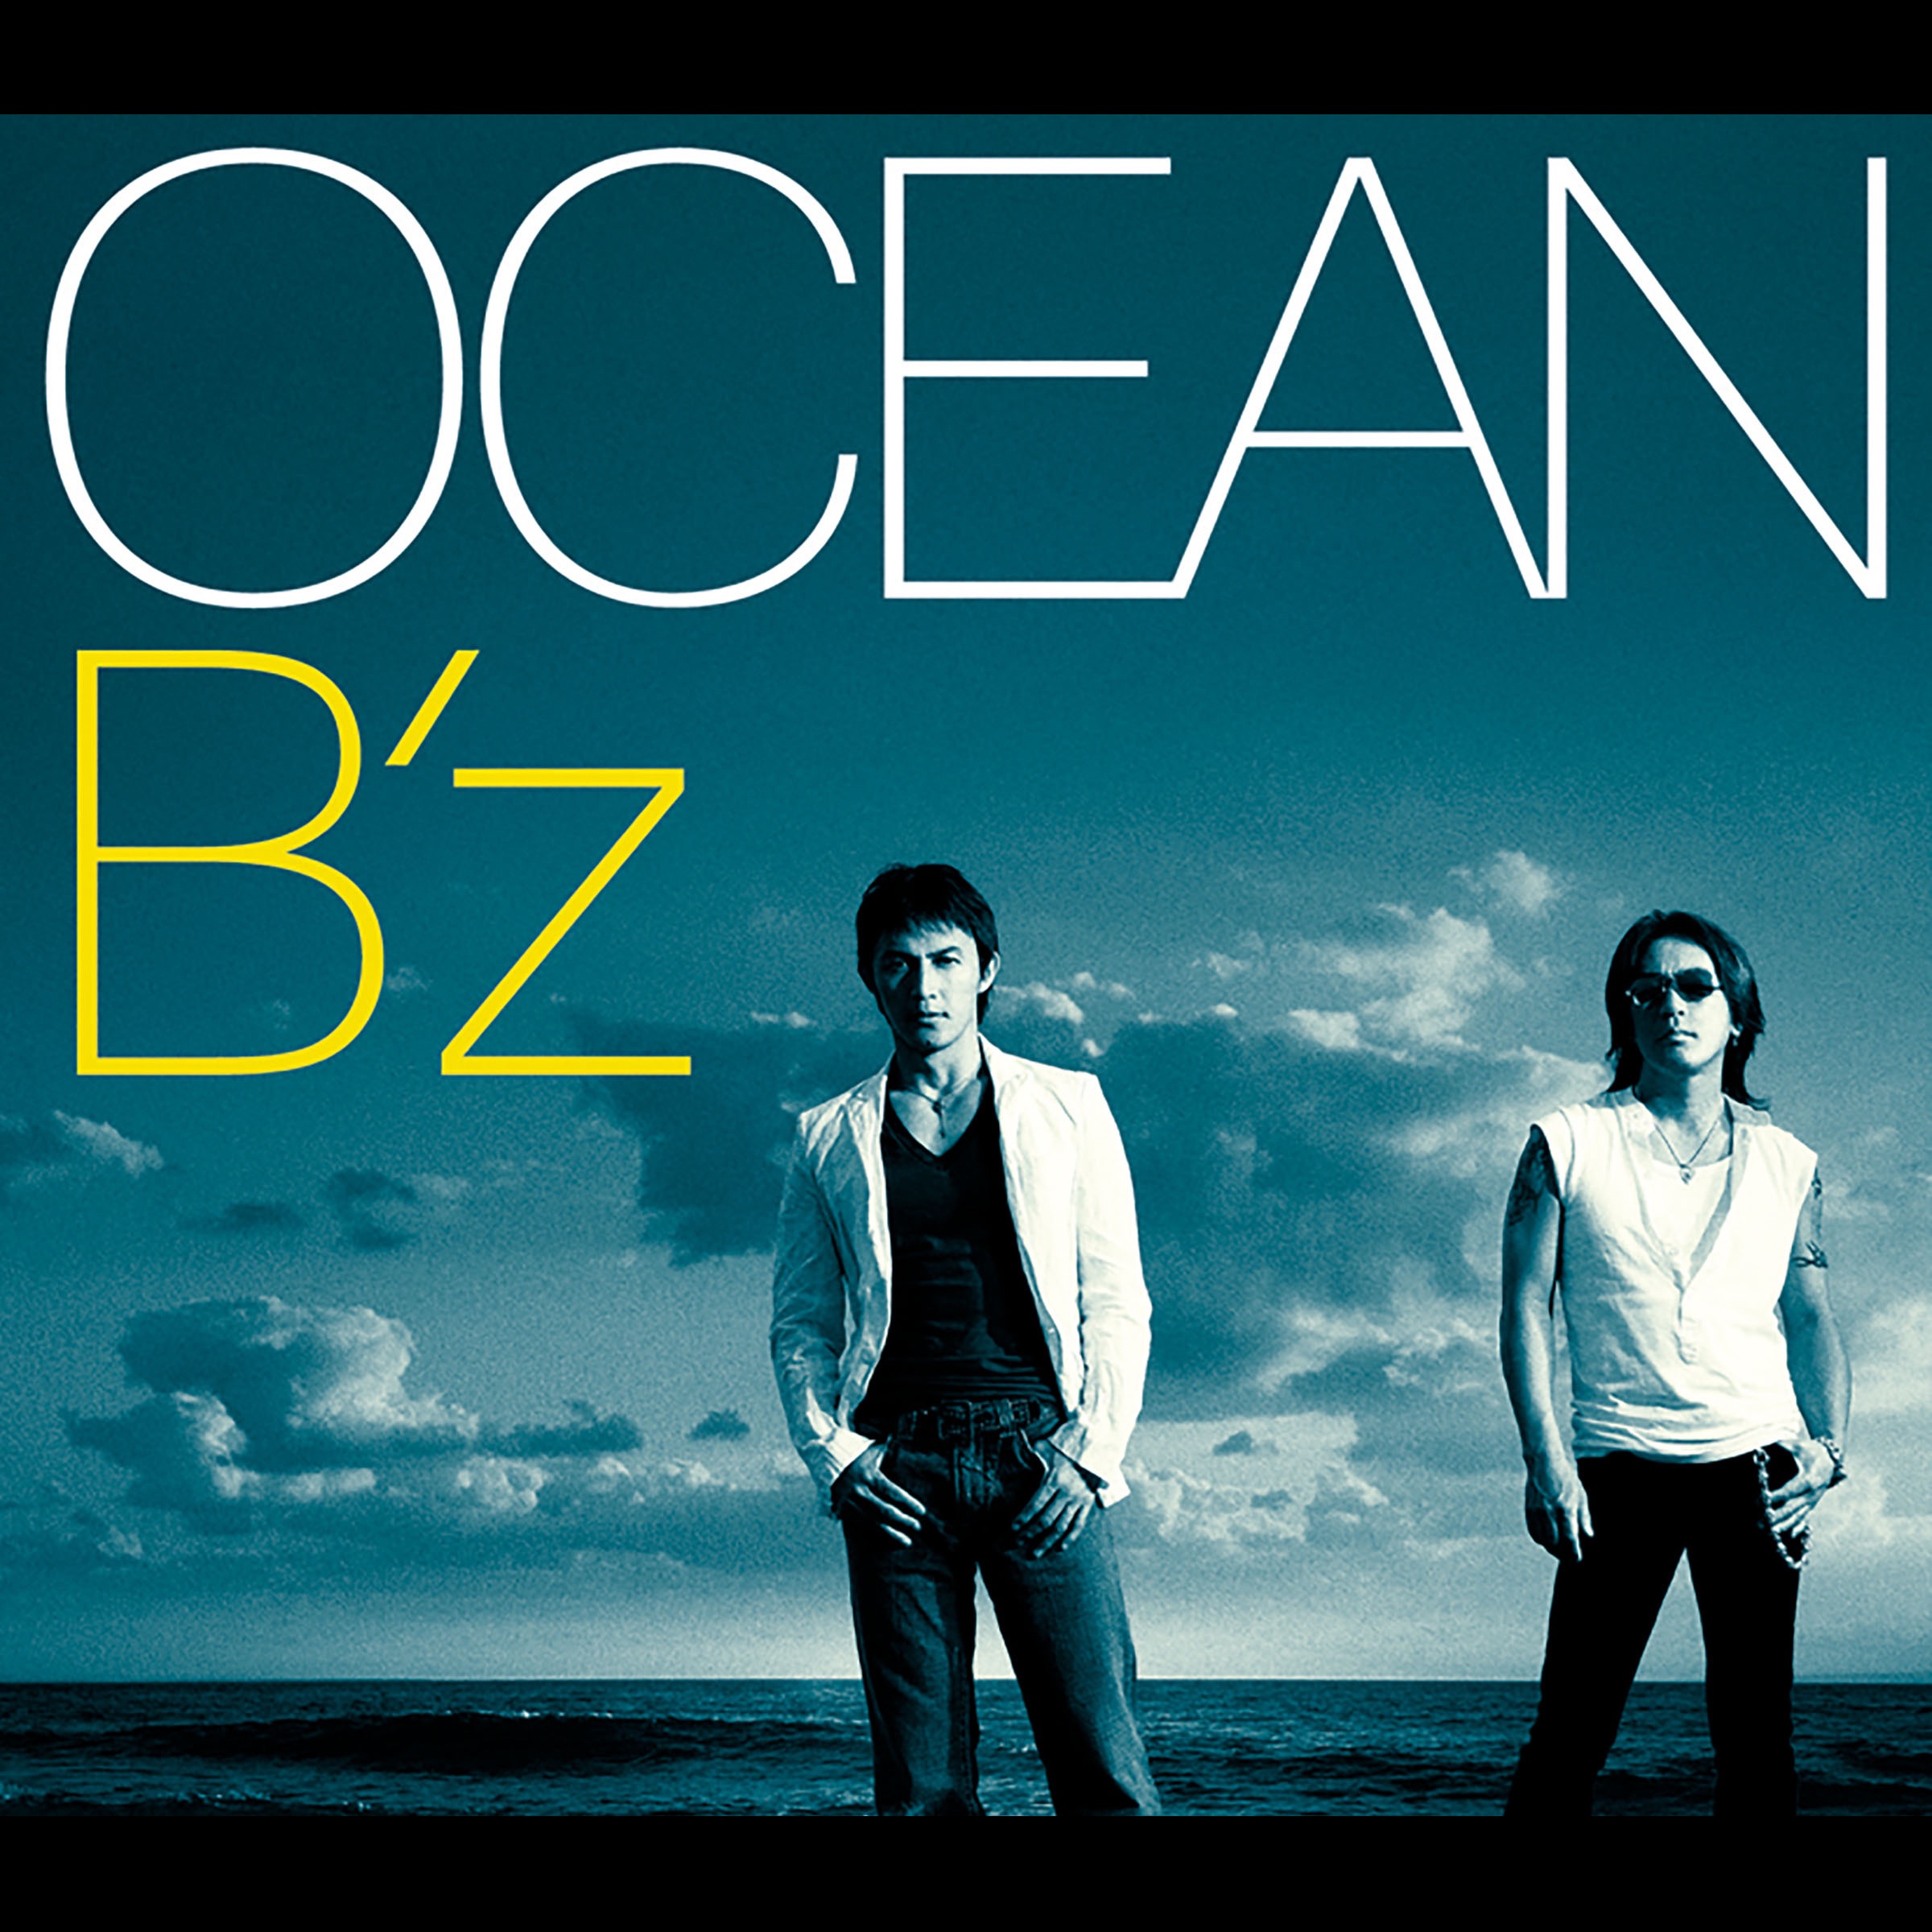 B z текст. Океан обложка. Песня океан обложка. Оушен альбом. Ocean b.